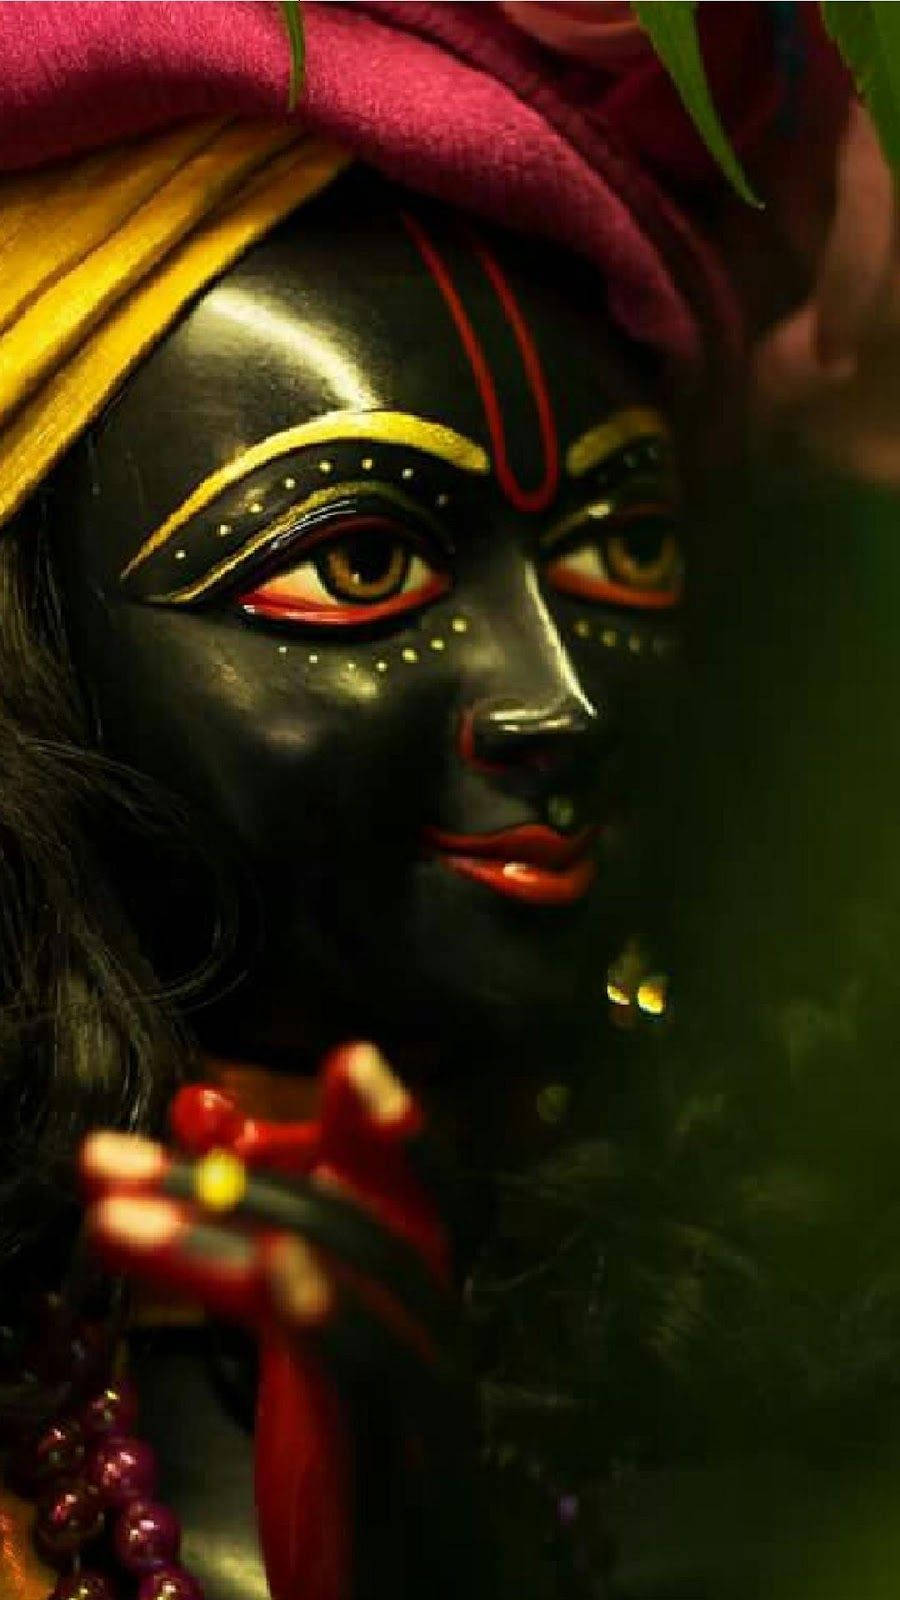 Majestic Black Krishna Statue Taken With Phone Camera Background